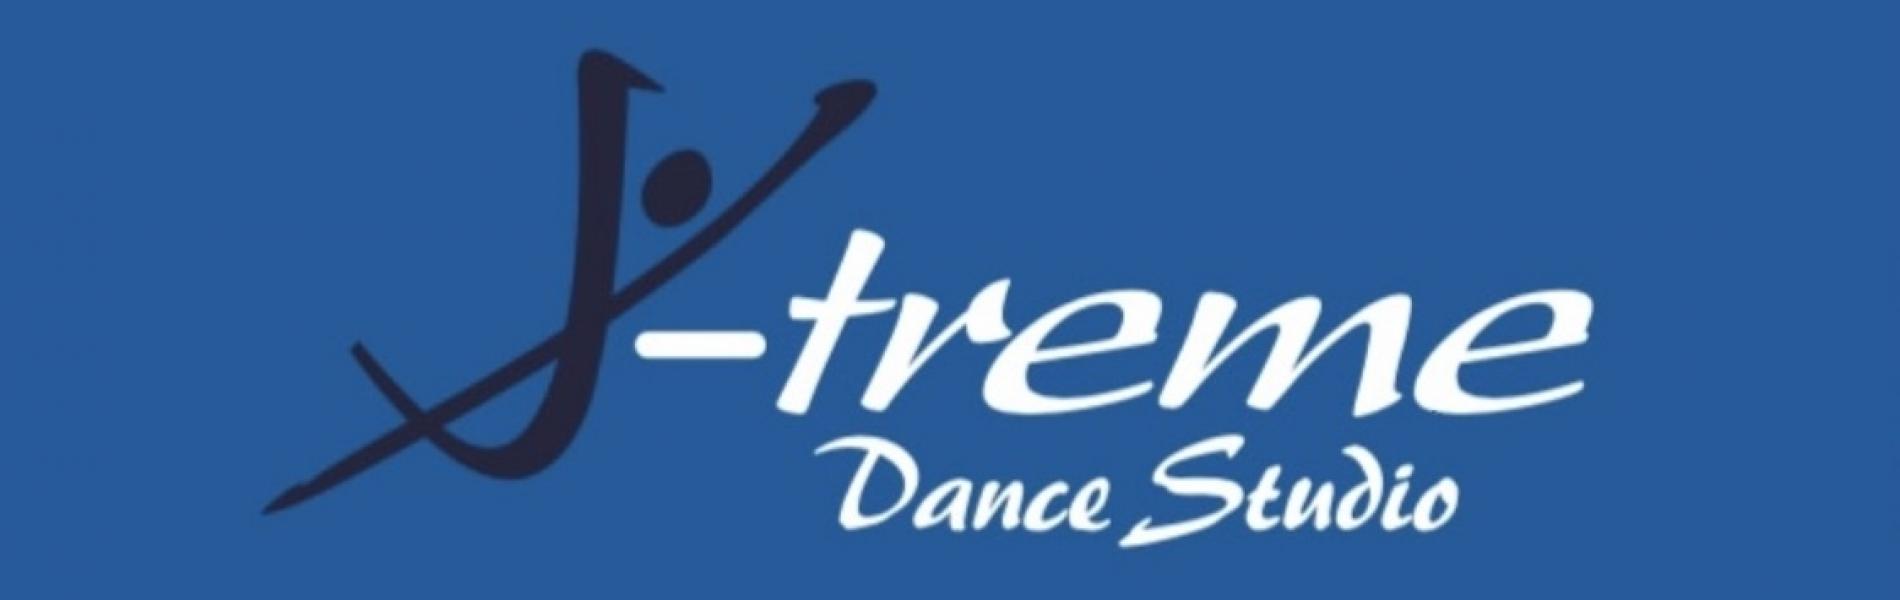 X-treme Dance Studio logo